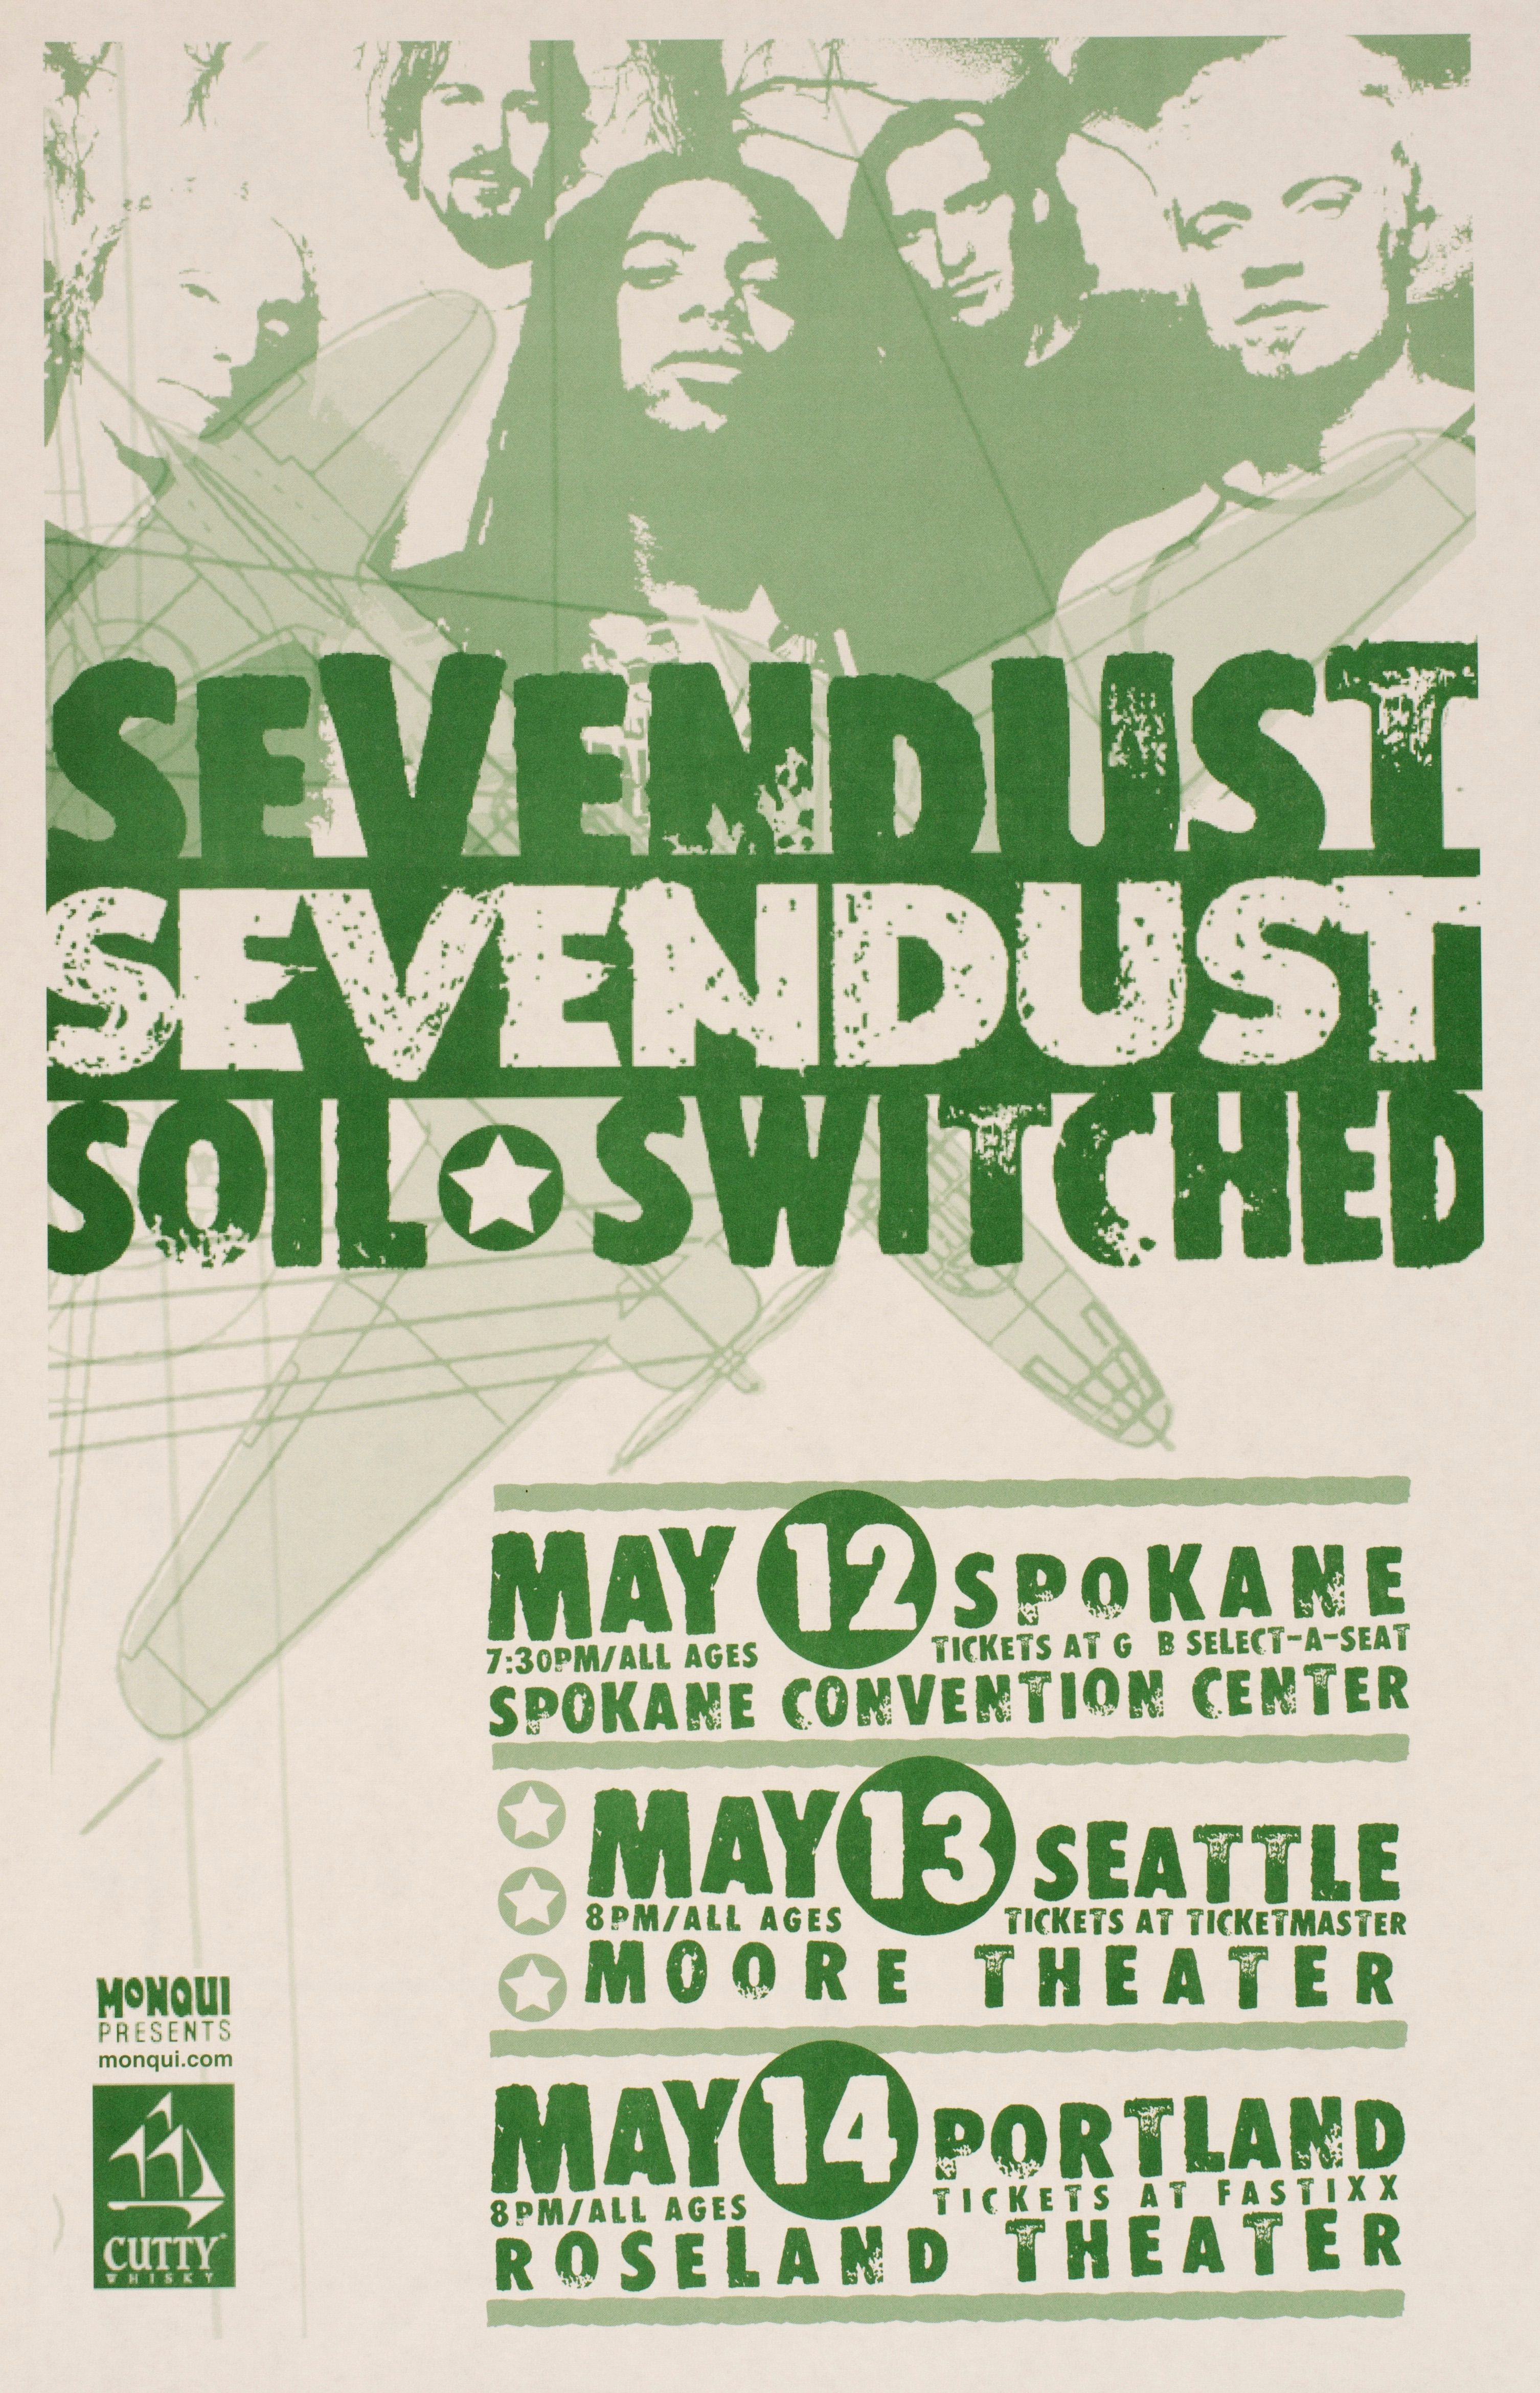 MXP-83.3 Sevendust Spokane Convention Center & Moore Theater & Roseland Theater 2003 Concert Poster